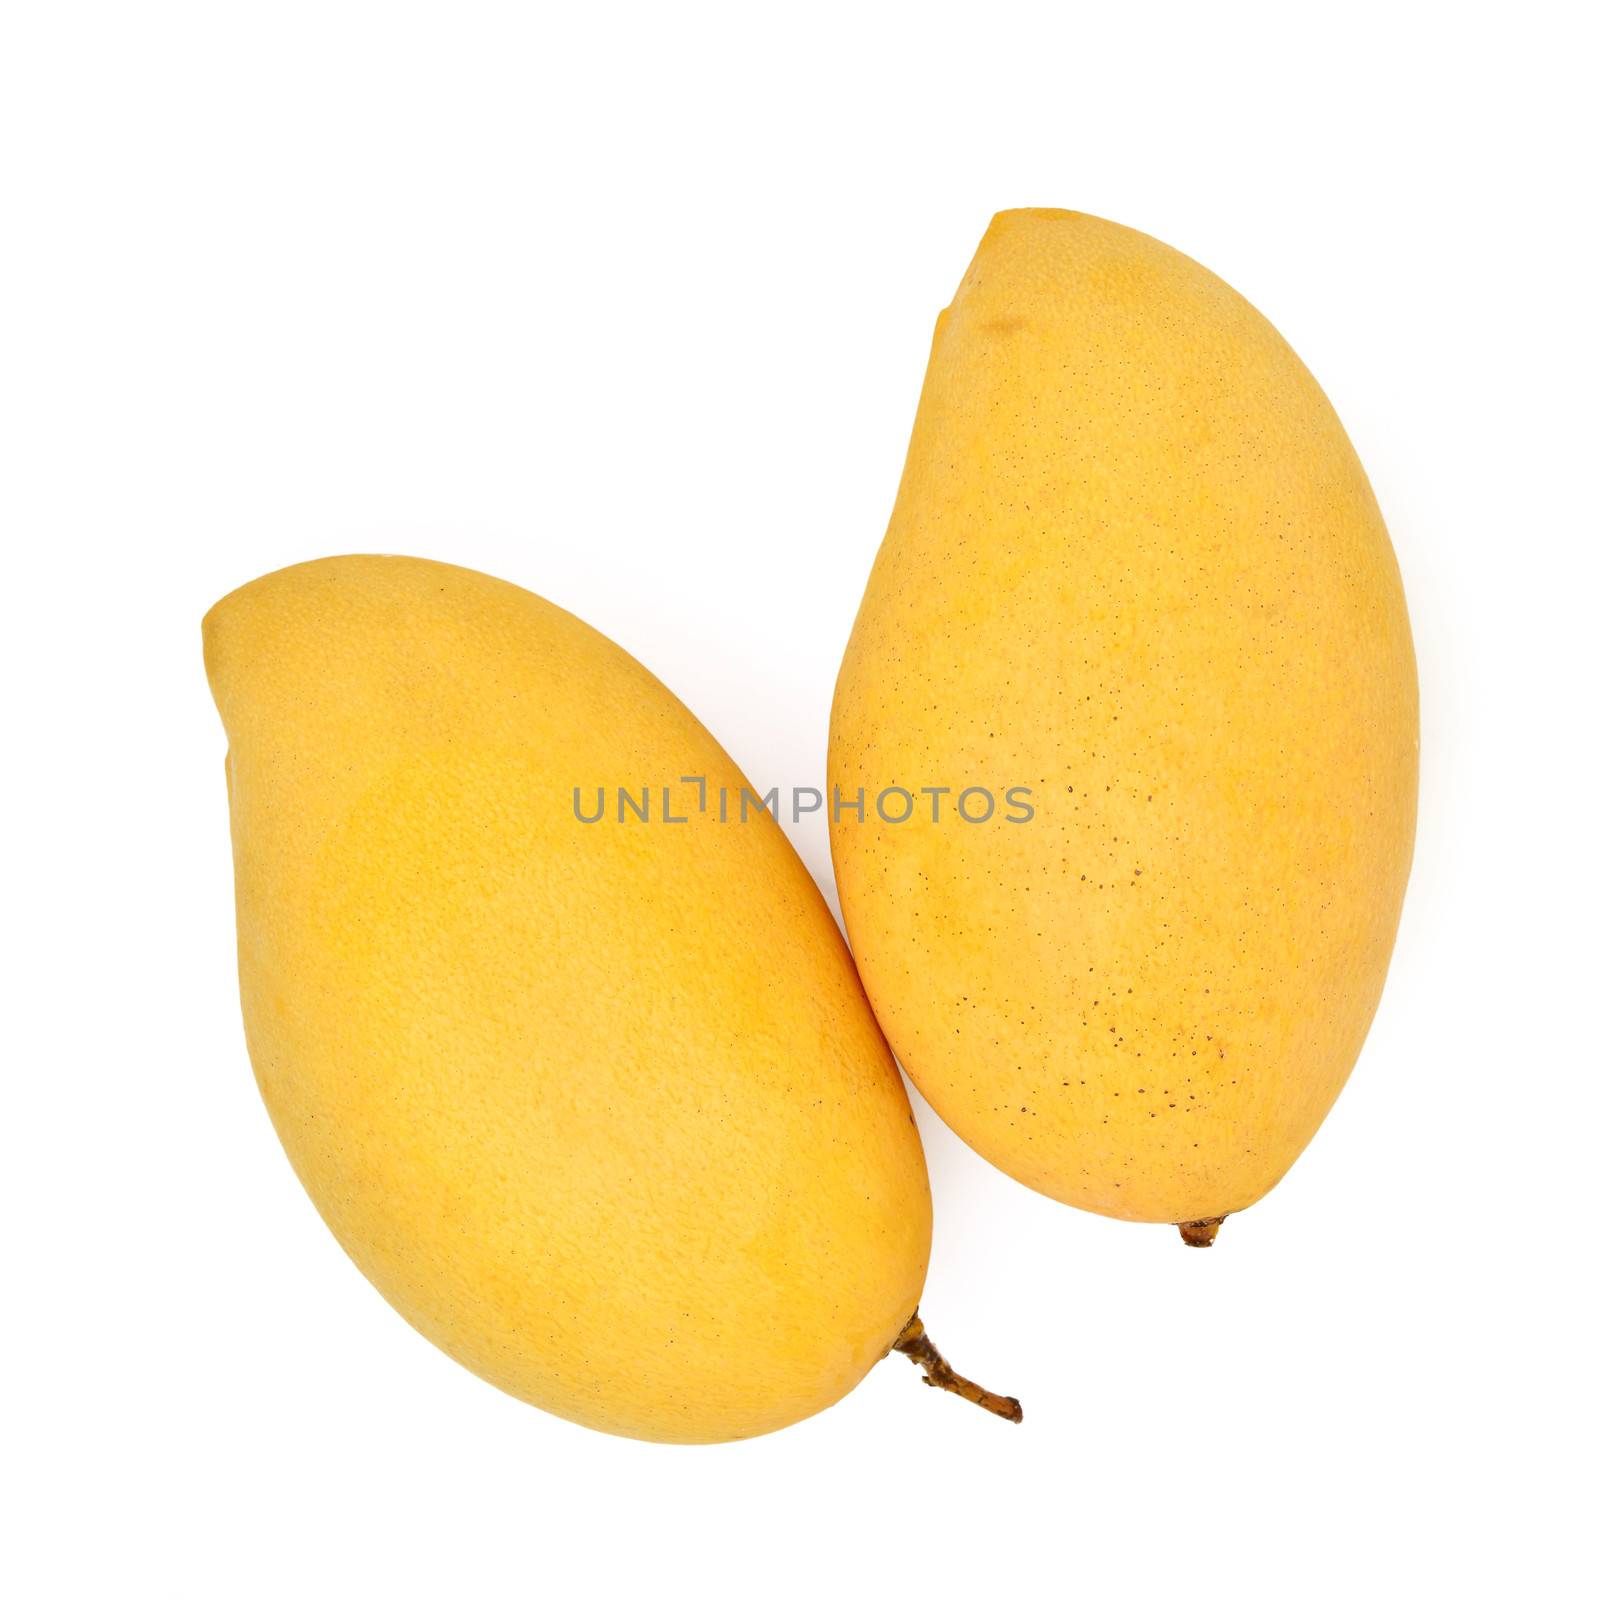 Mango by antpkr